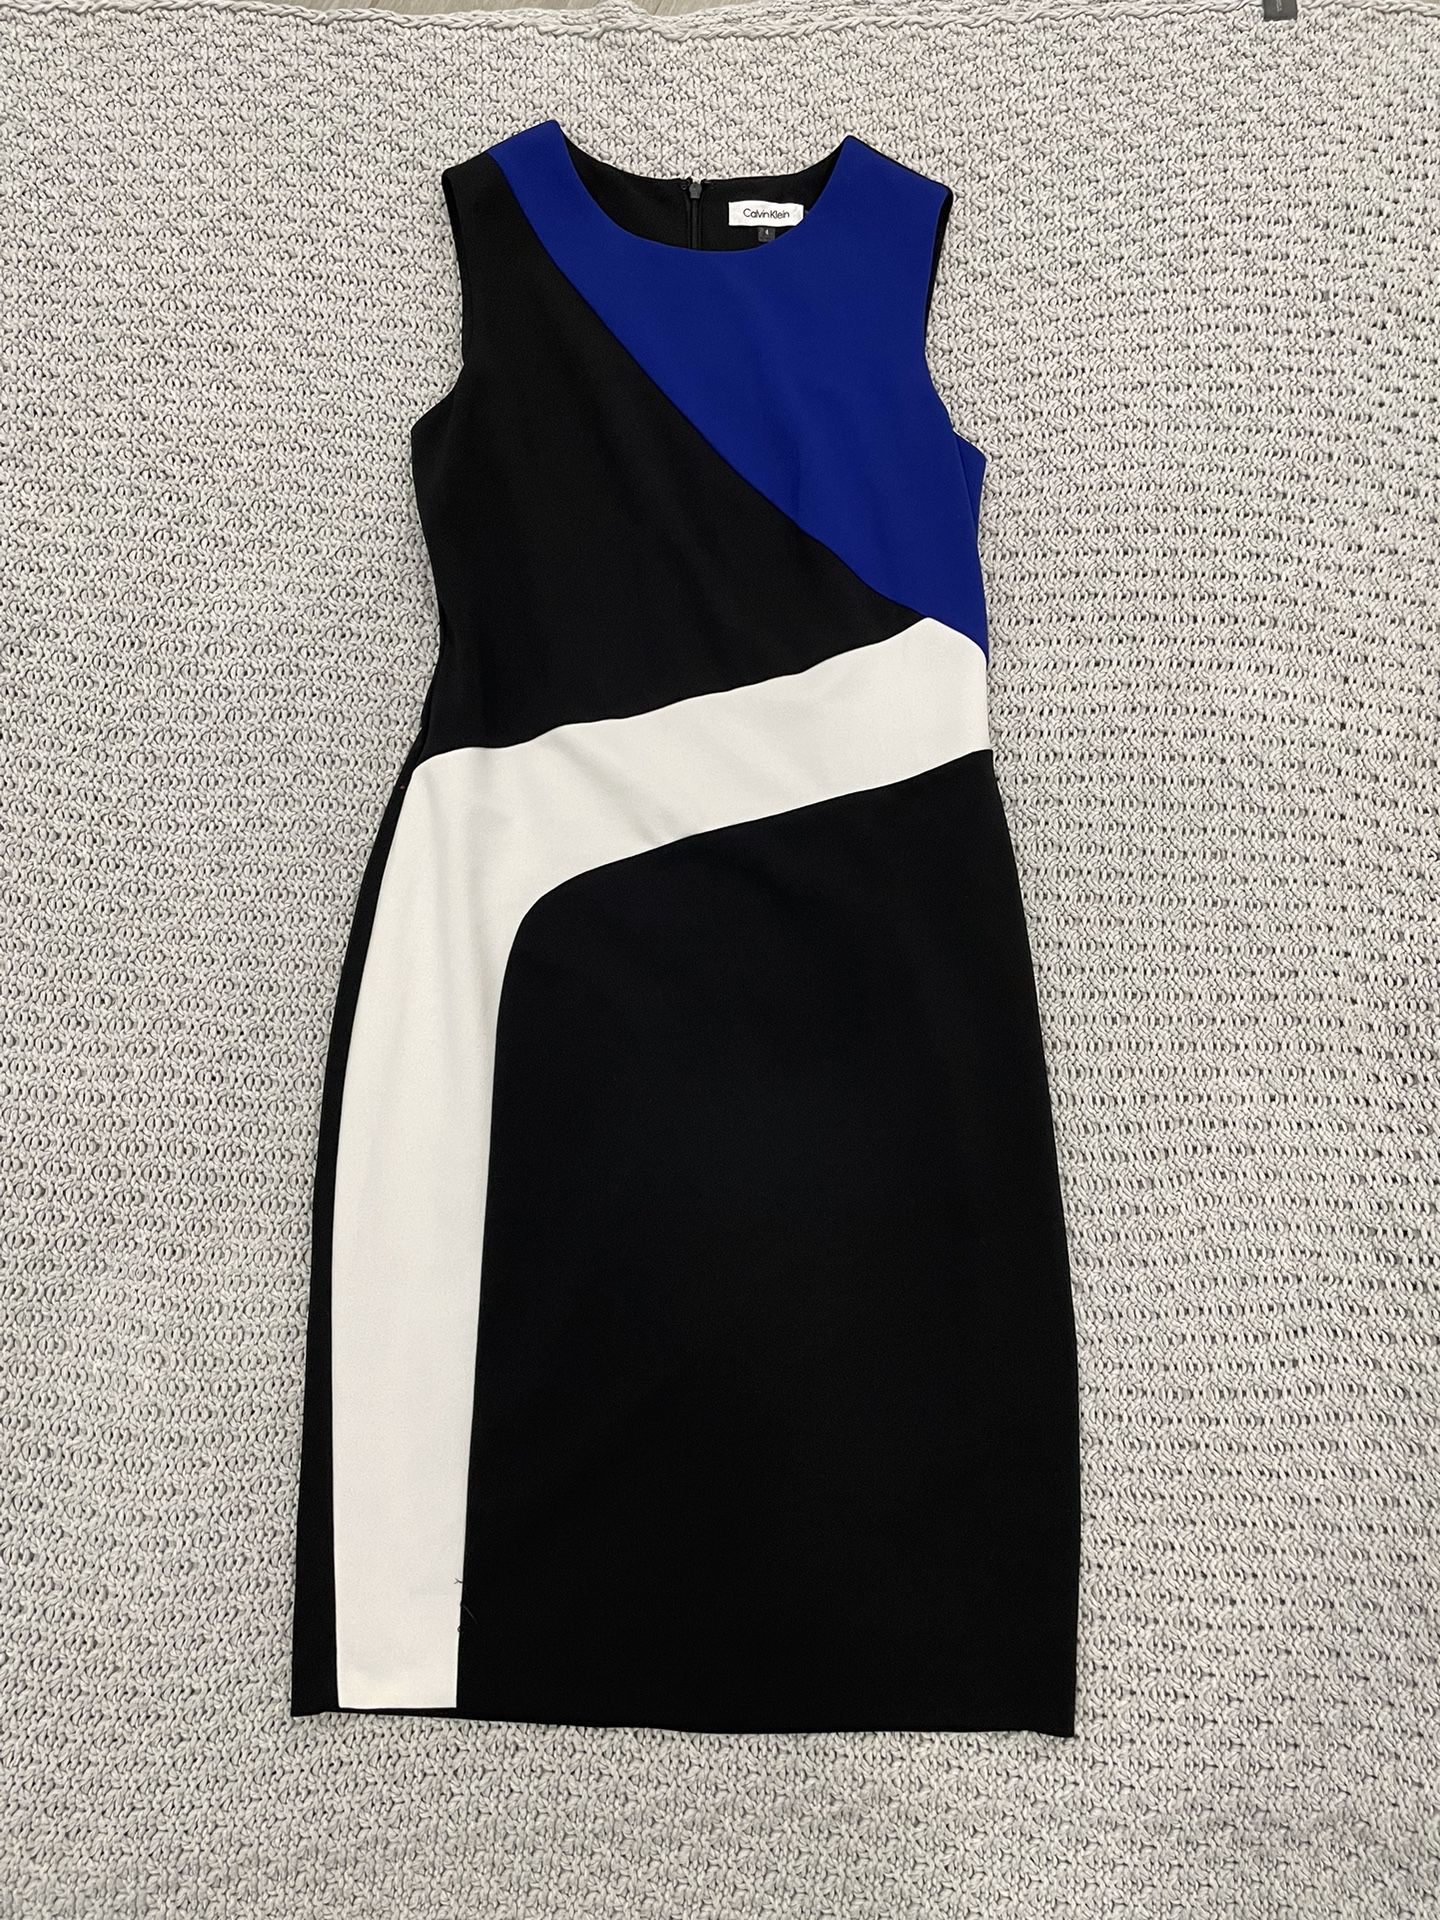 Calvin Klein sheath dress. Size 4